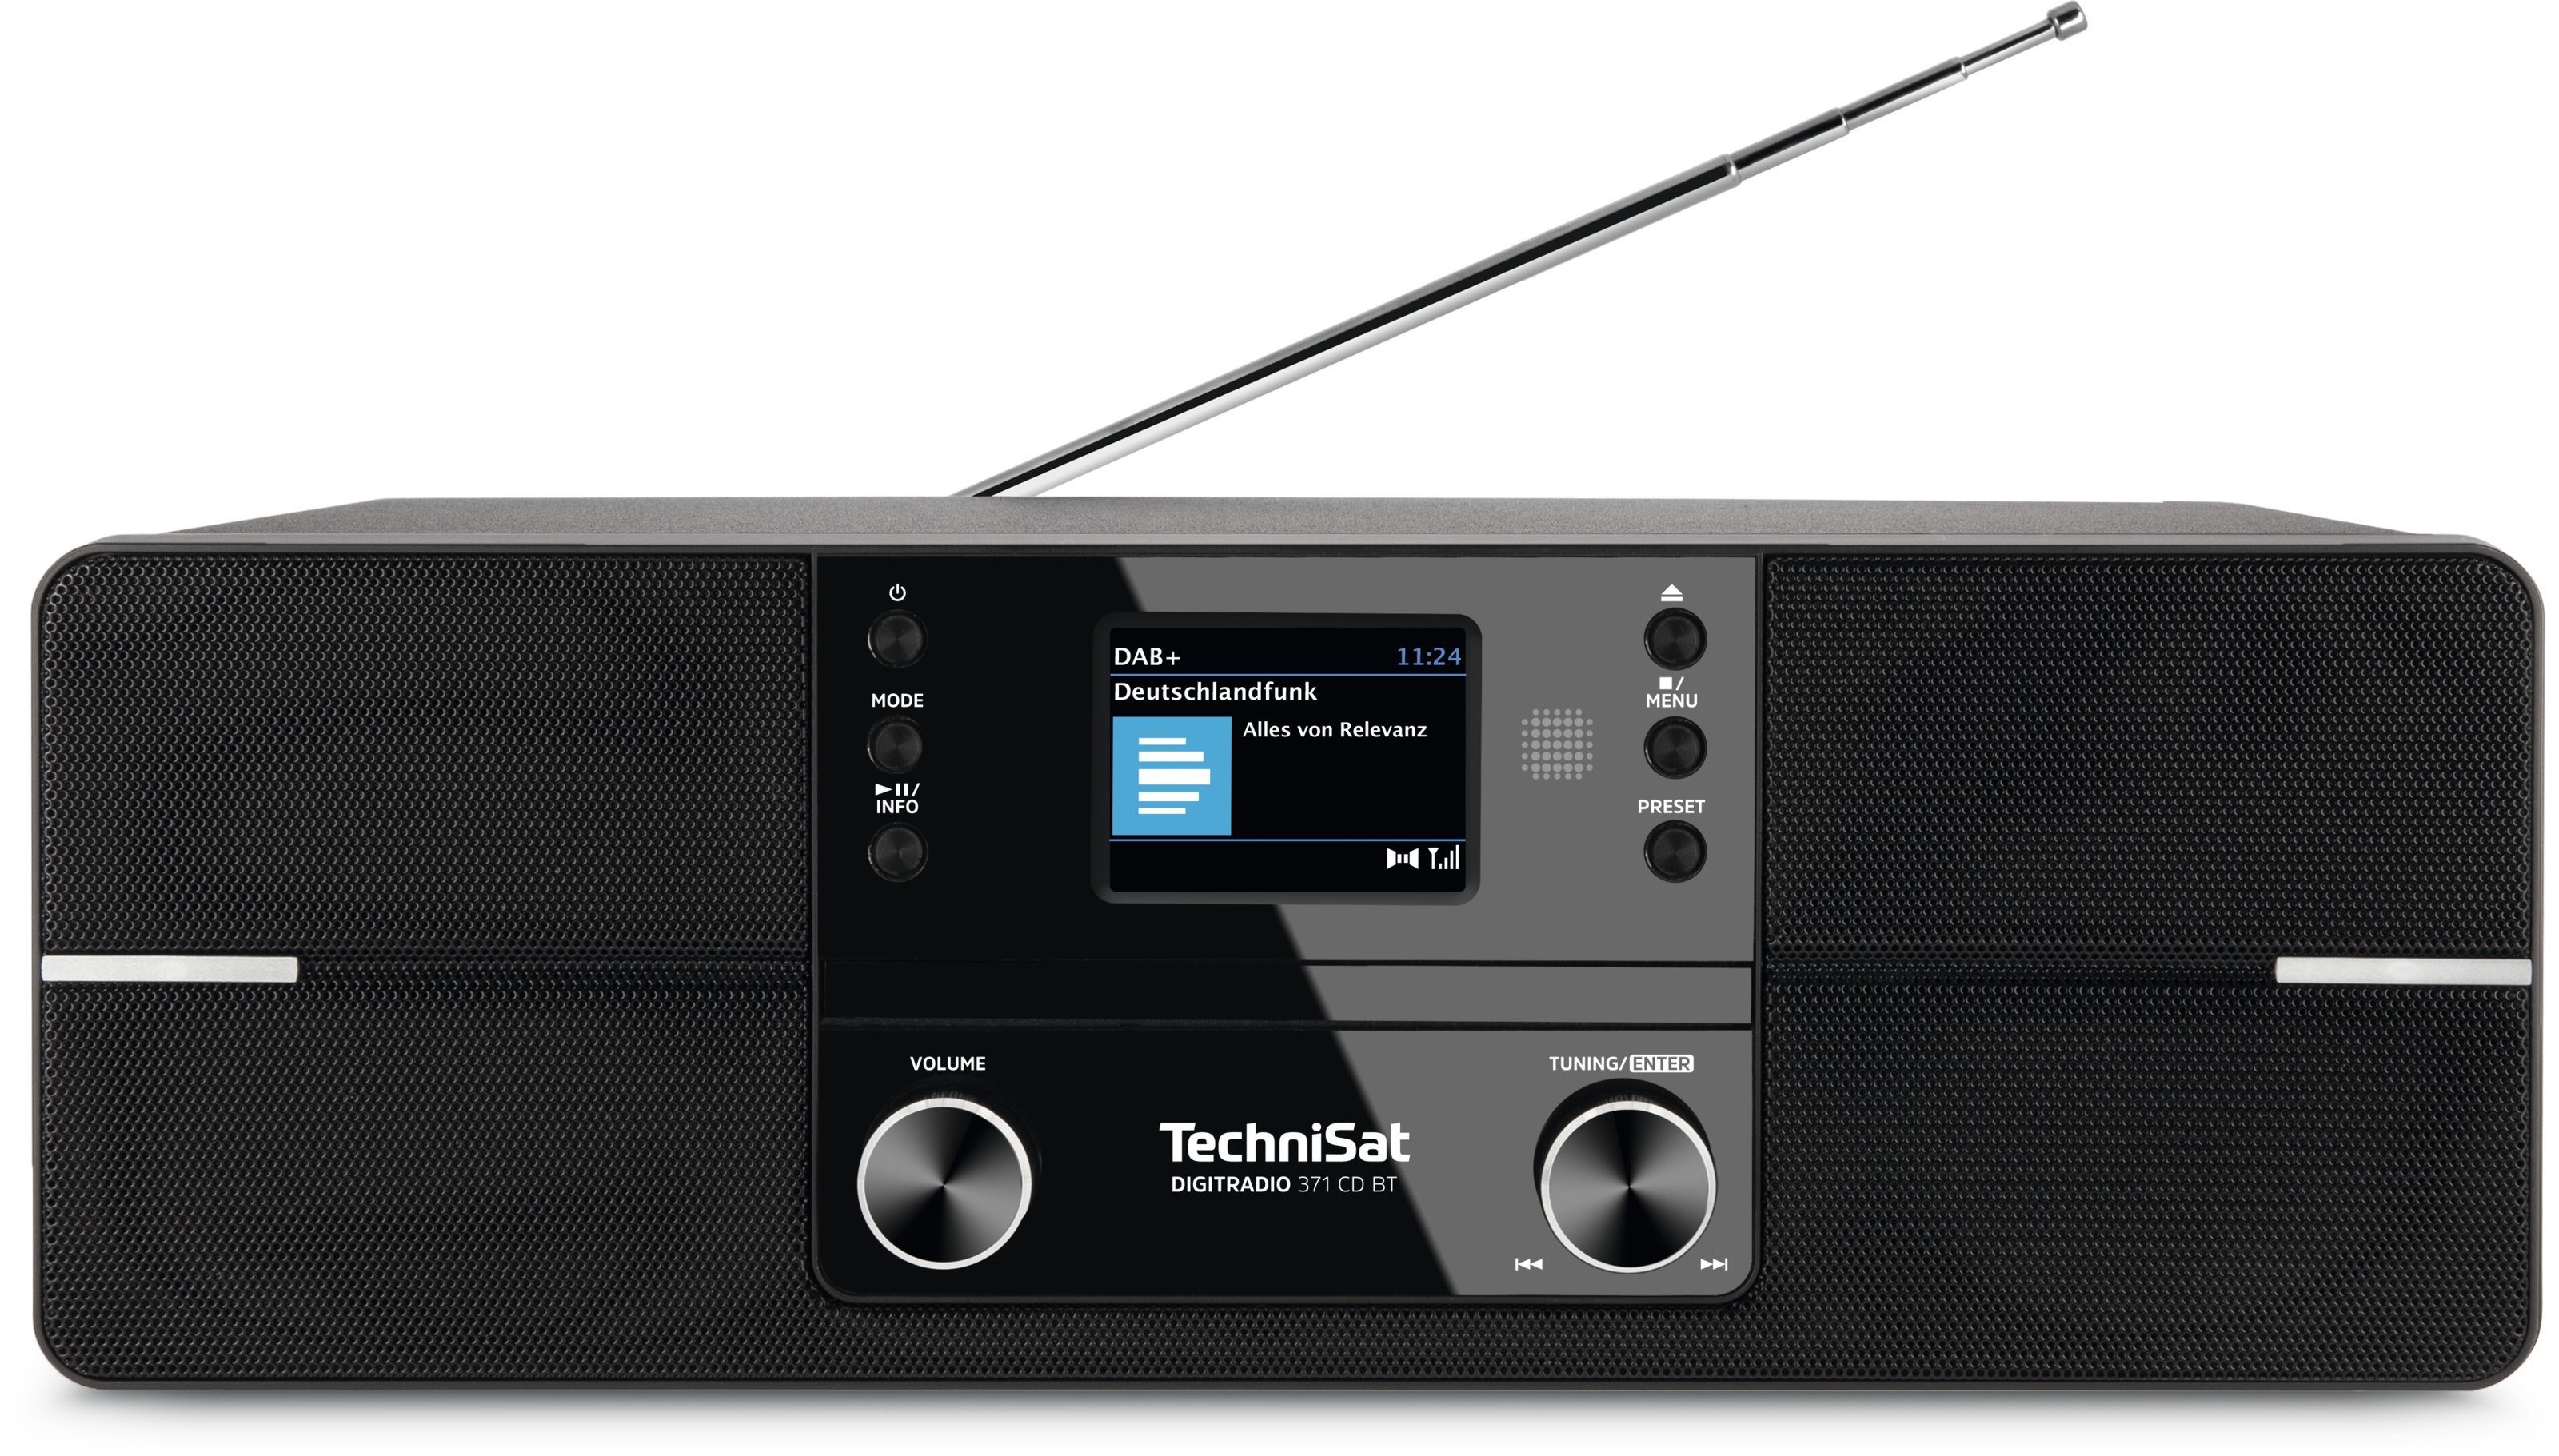 Digitalradio (Digitalradio (DAB), Bluetooth, BT 371 DIGITRADIO schwarz Fernbedienung) Inklusive CD UKW, Radiowecktimer, 10,00 CD-Player, (DAB) W, TechniSat